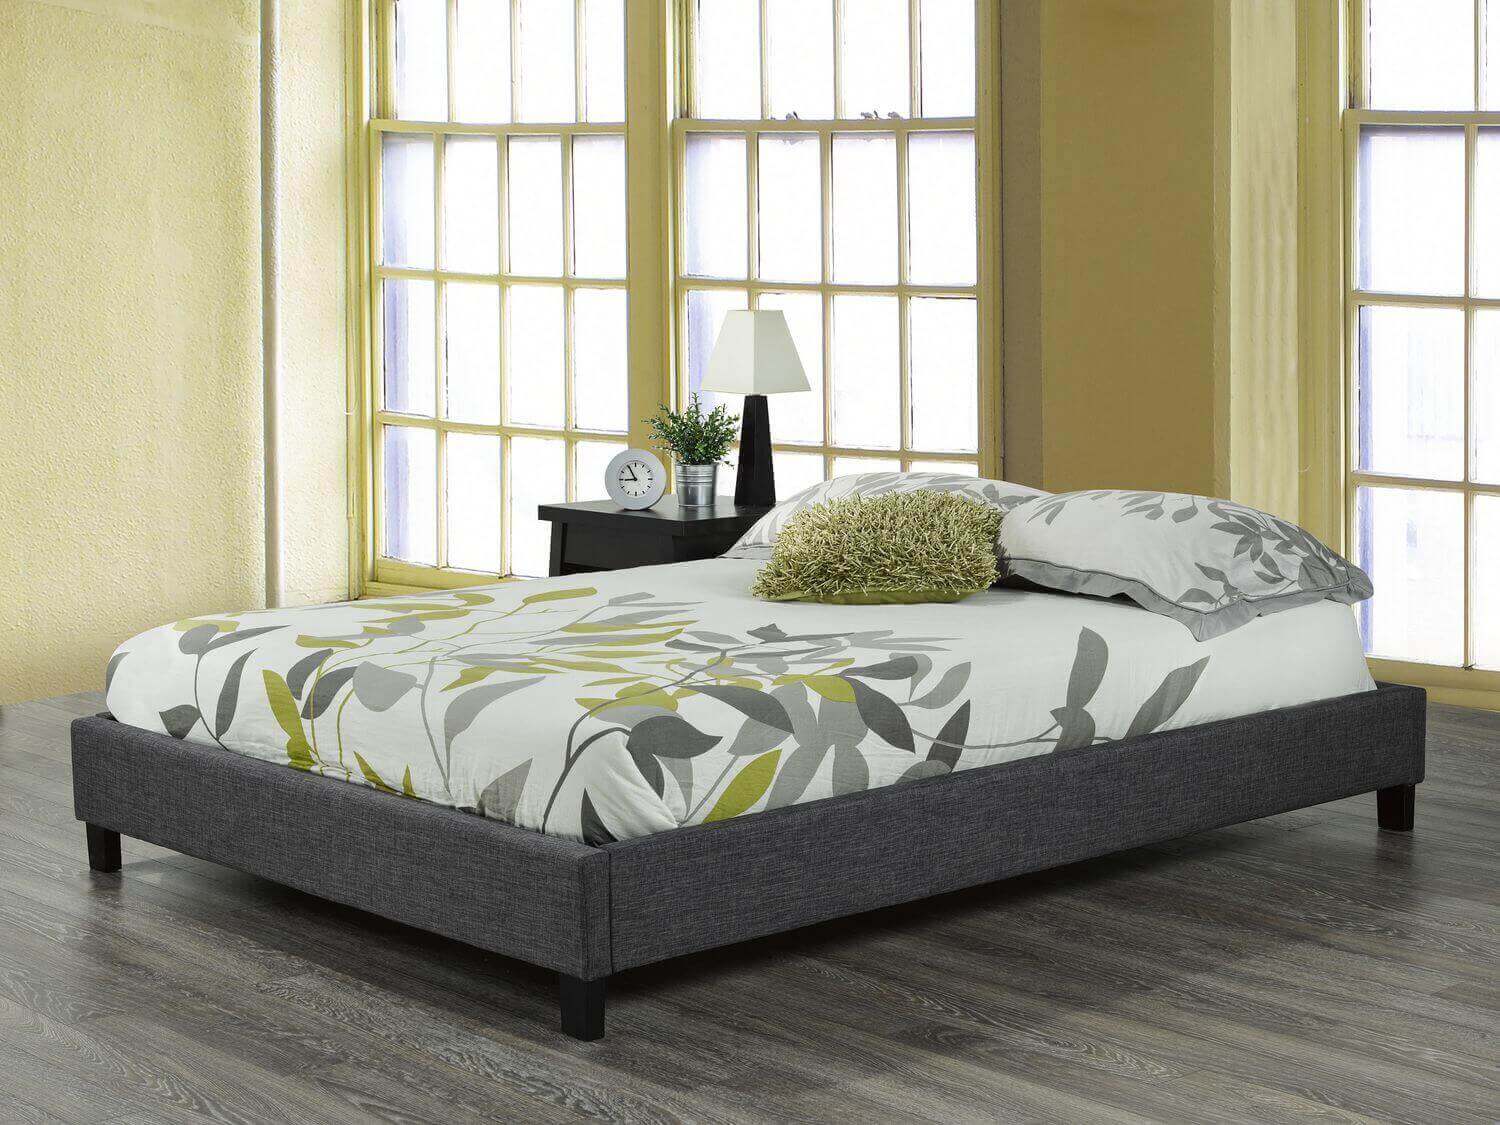 bed base and mattress set